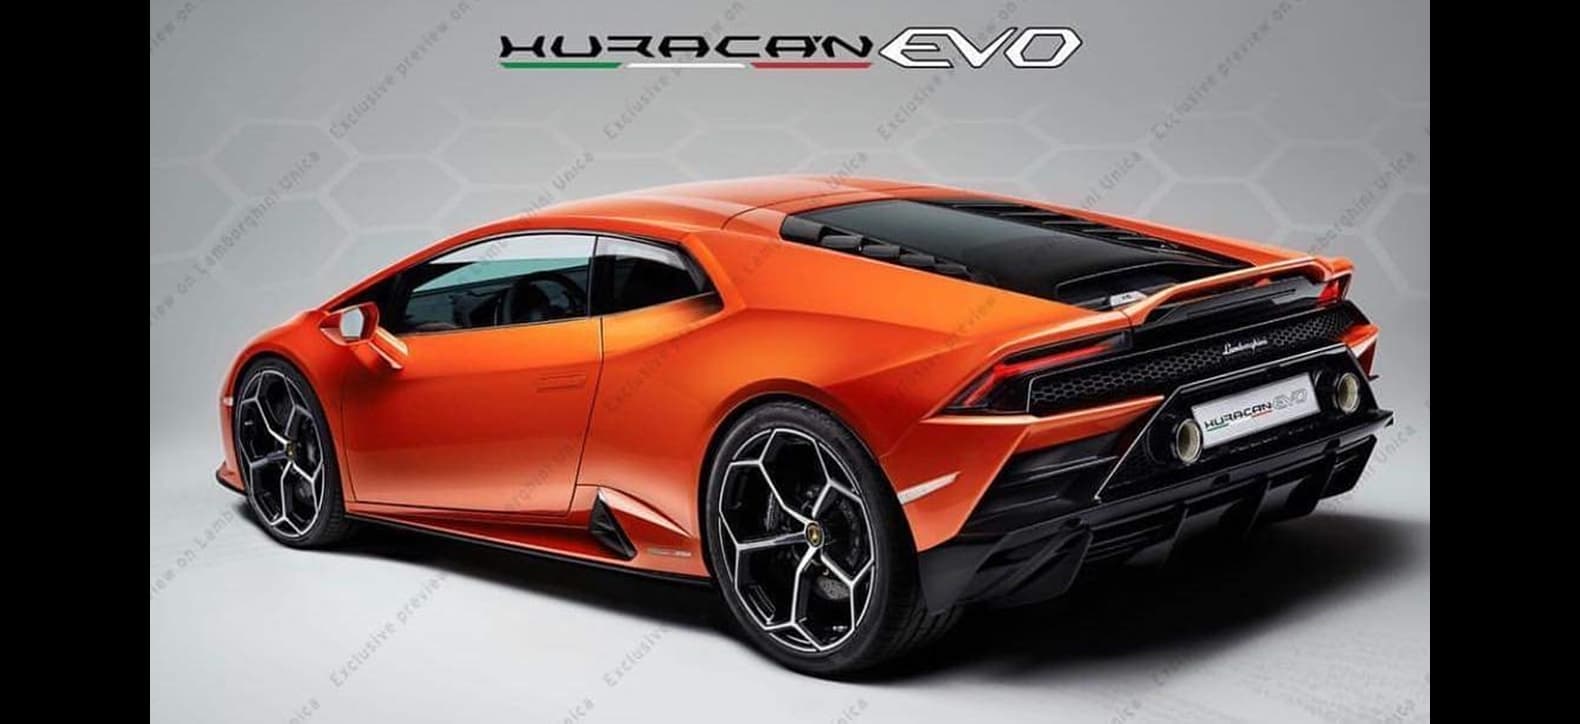 Primera imagen del Lamborghini Huracán EVO 2019